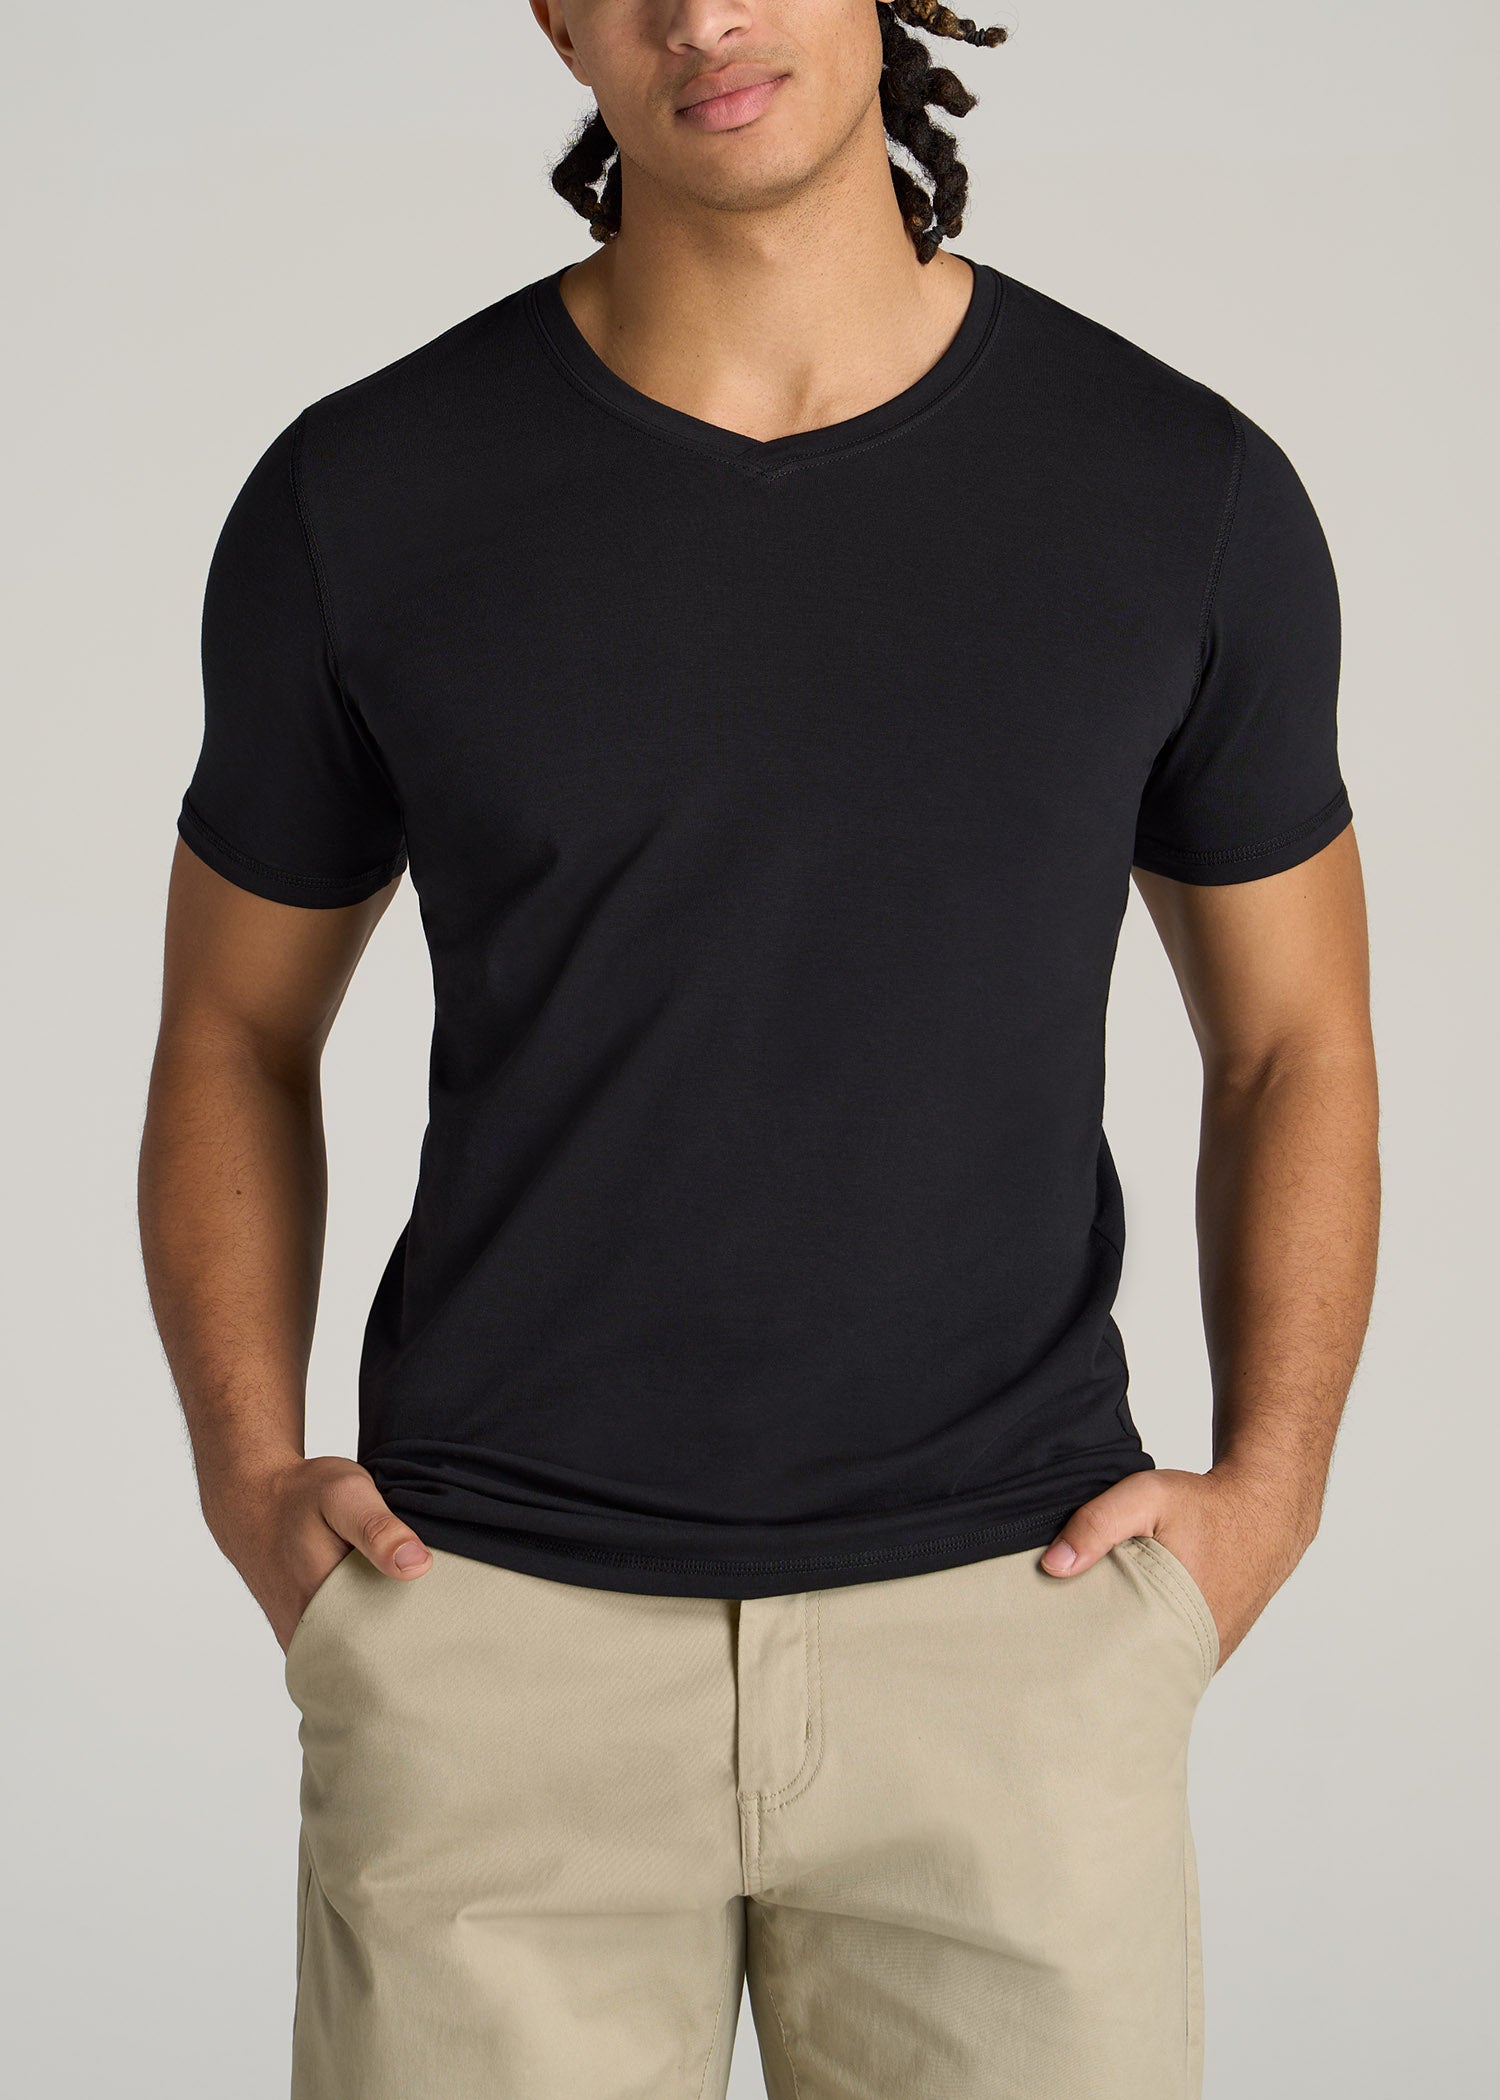 Slim Fit T-shirt - Black - Men